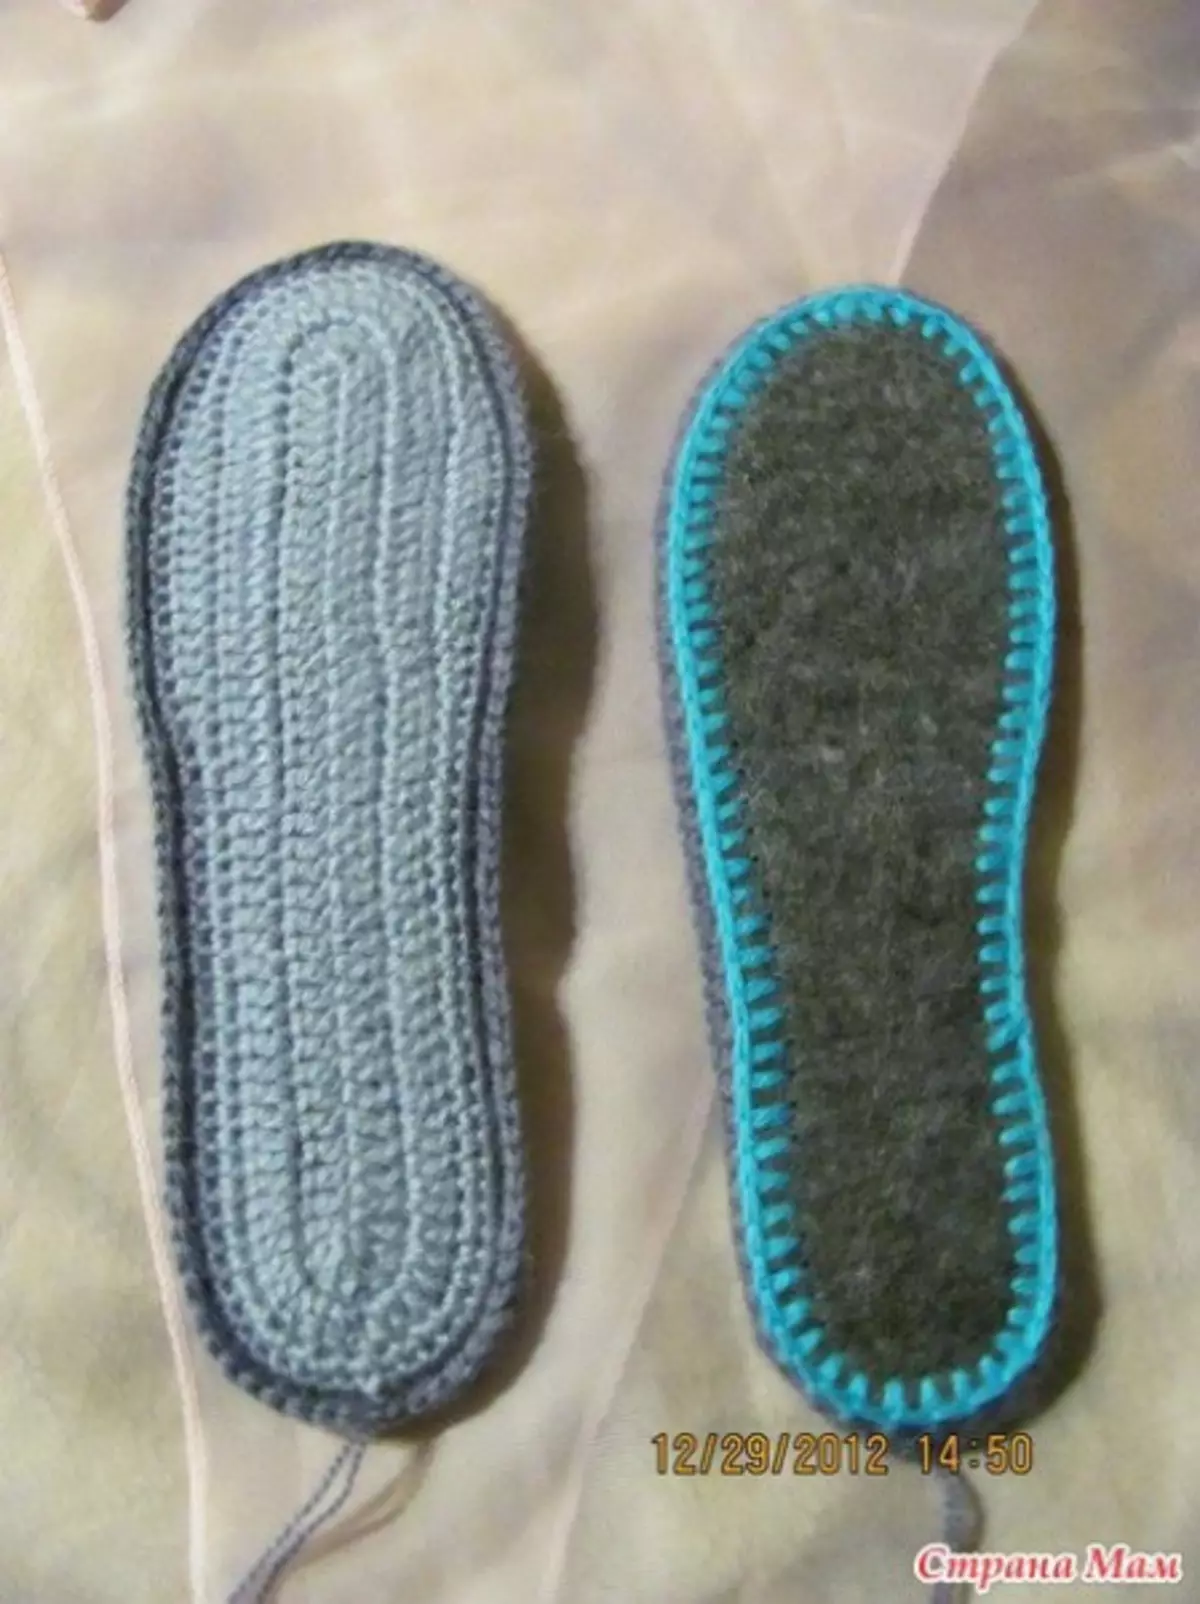 Sepatu rajutan Crochet: Cara mengikat sepatu bot untuk rumah dengan tangan Anda sendiri dengan foto dan video